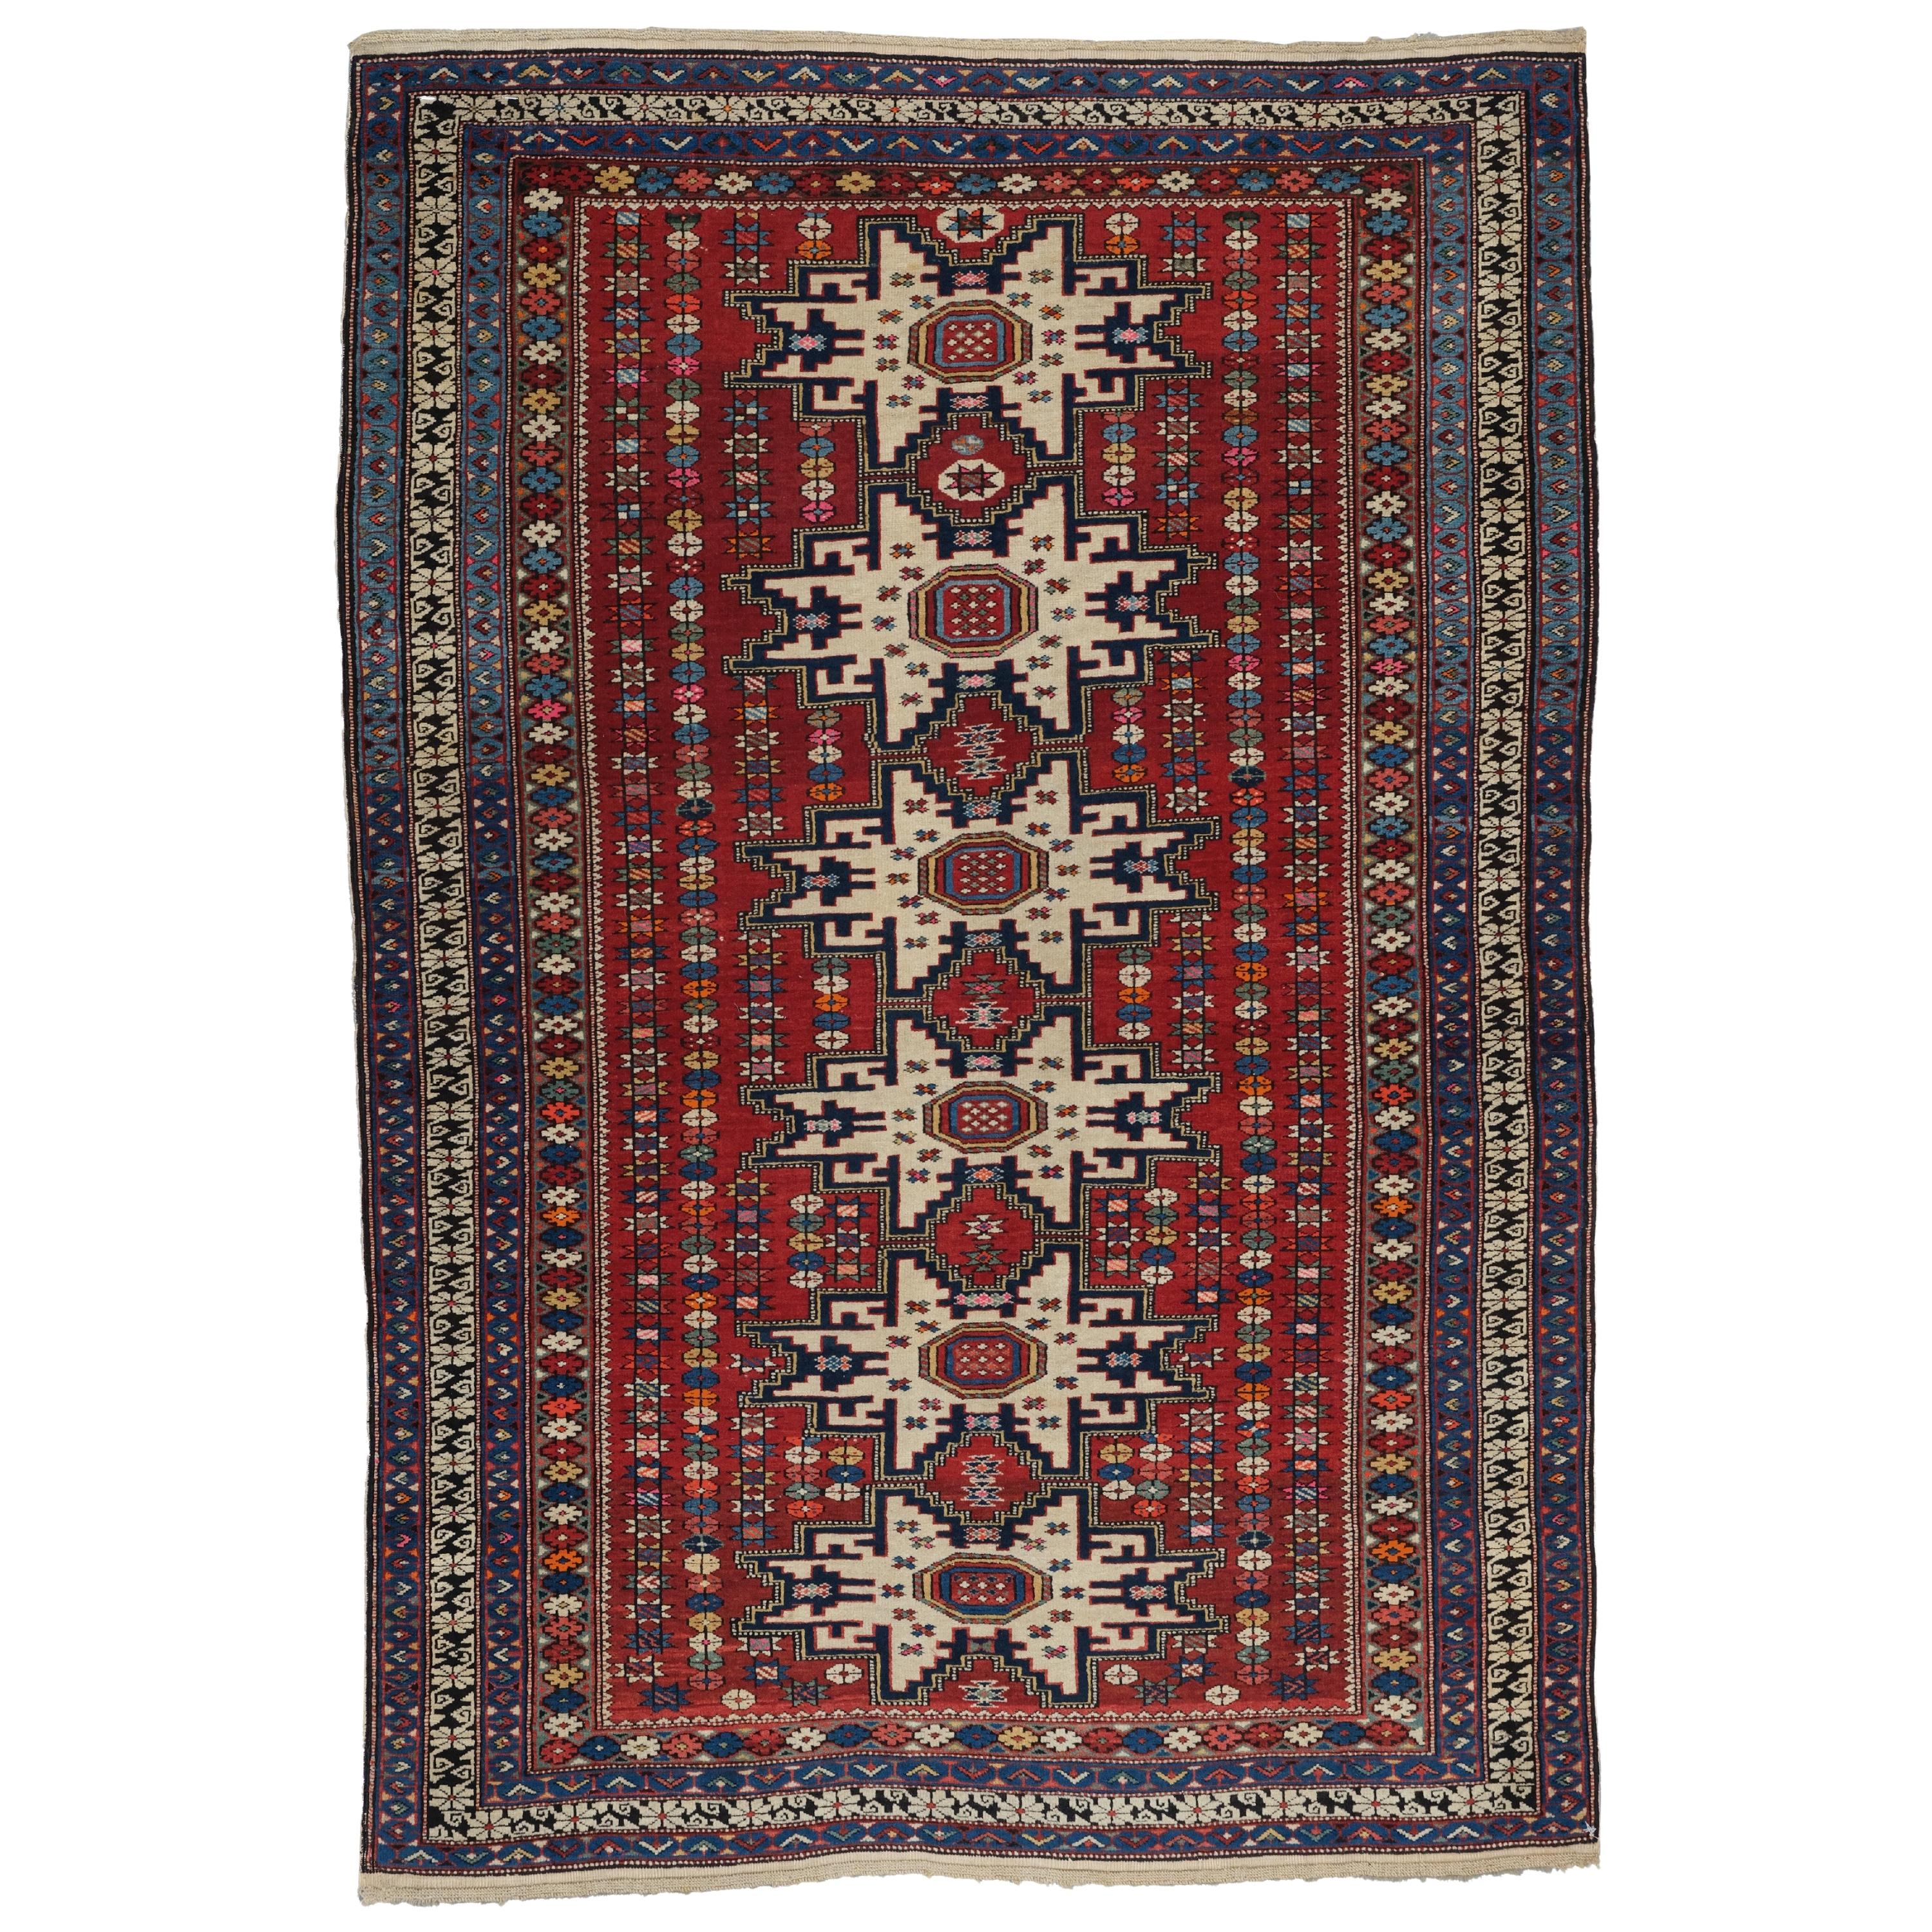 Antiker Shirvan Lezgi-Teppich - Kaukasischer Shirvan-Teppich aus dem 19. Jahrhundert, antiker Teppich